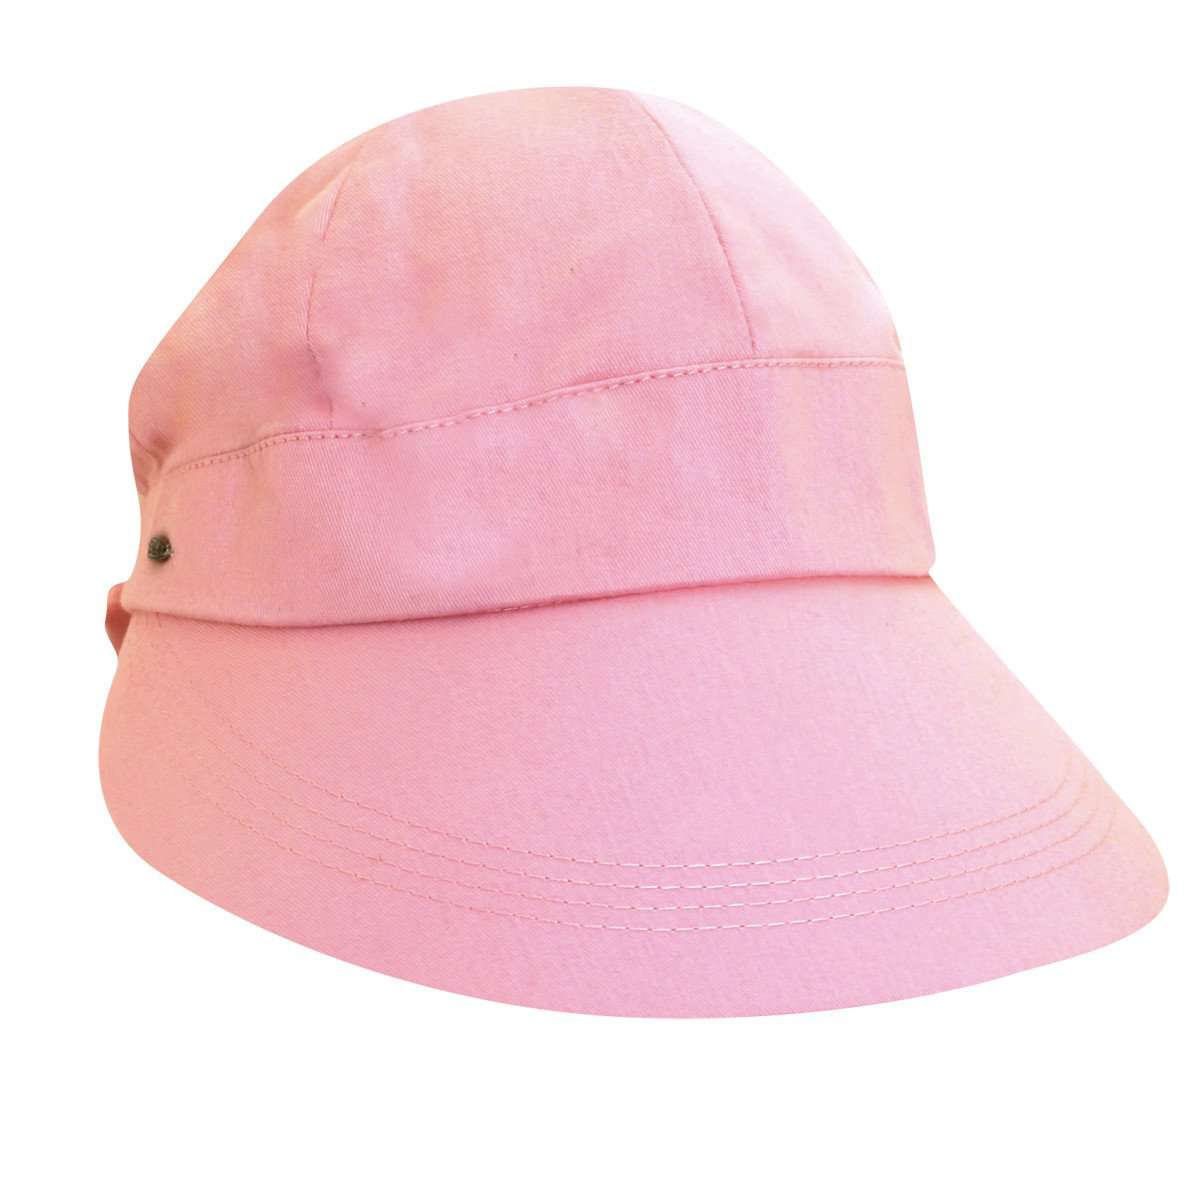 Cotton Facesaver Cap with Bow - Cappelli Hats Cap Cappelli Straworld l70swPK Pink Medium (57 cm) 